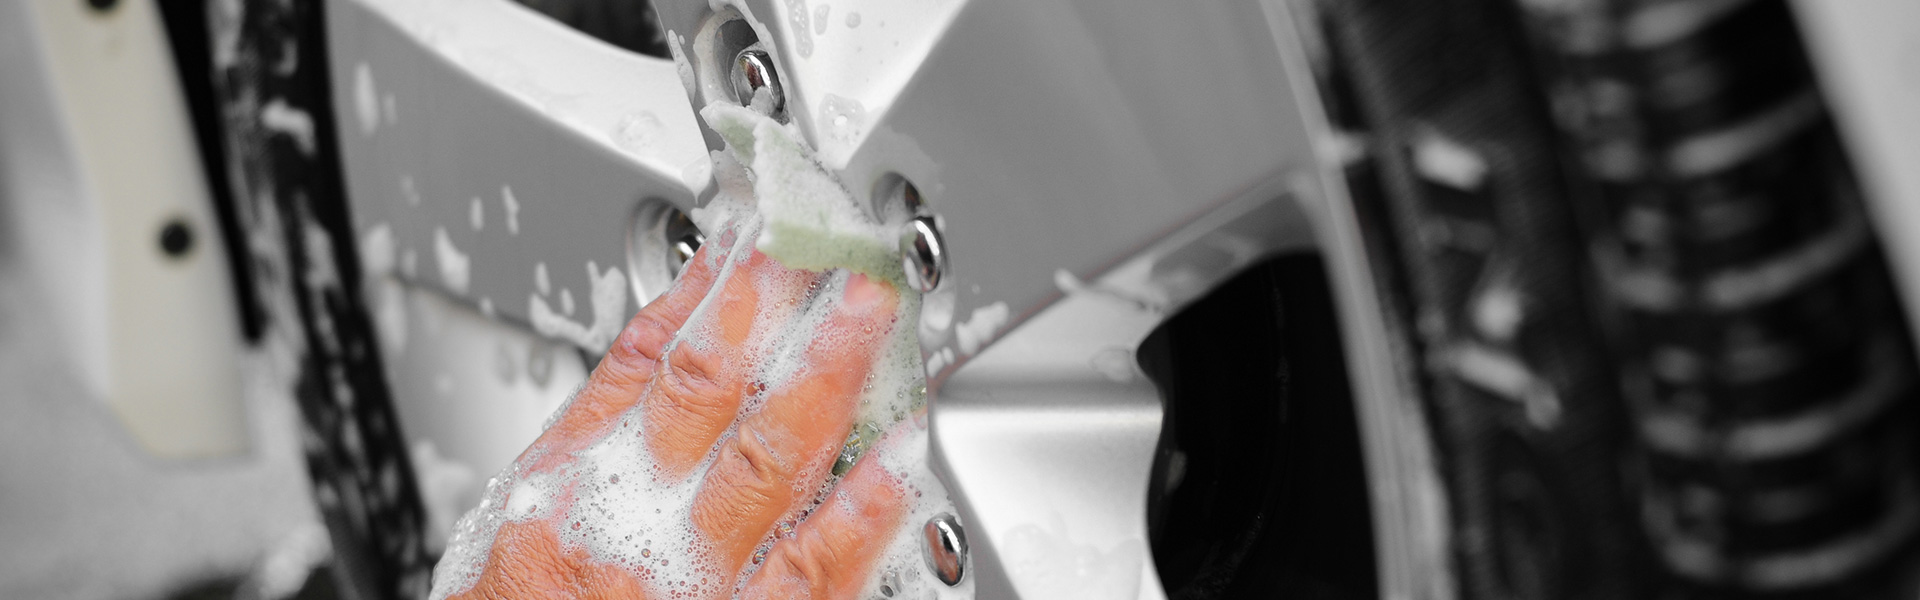 hand washing a car tire